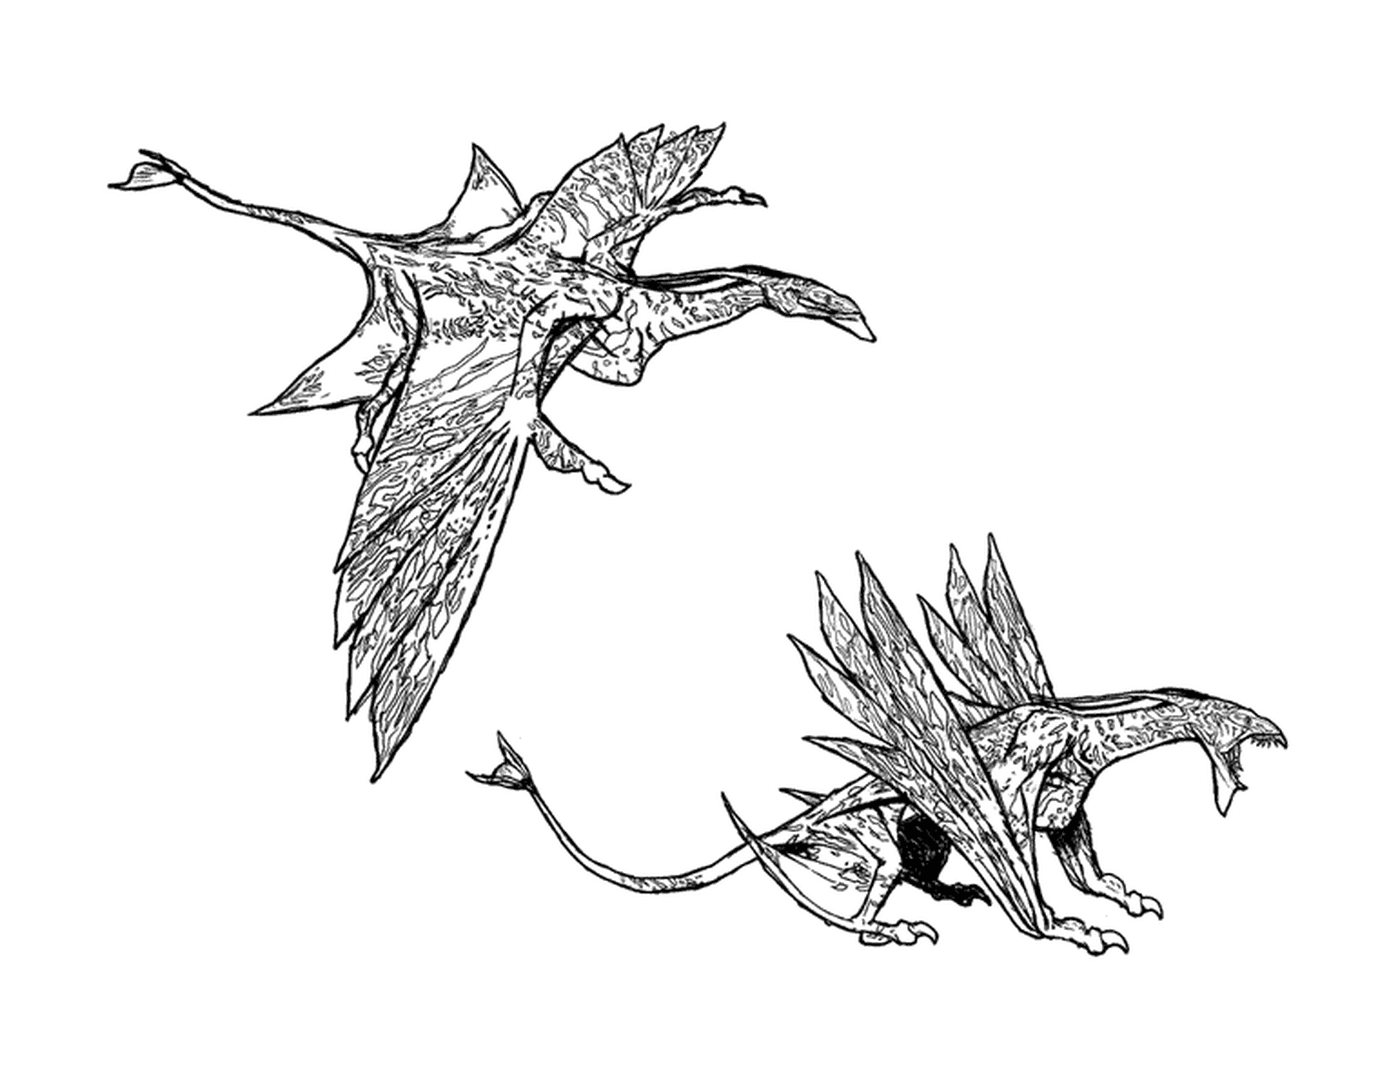  Dos dibujos de un dragón de alas extendidas 